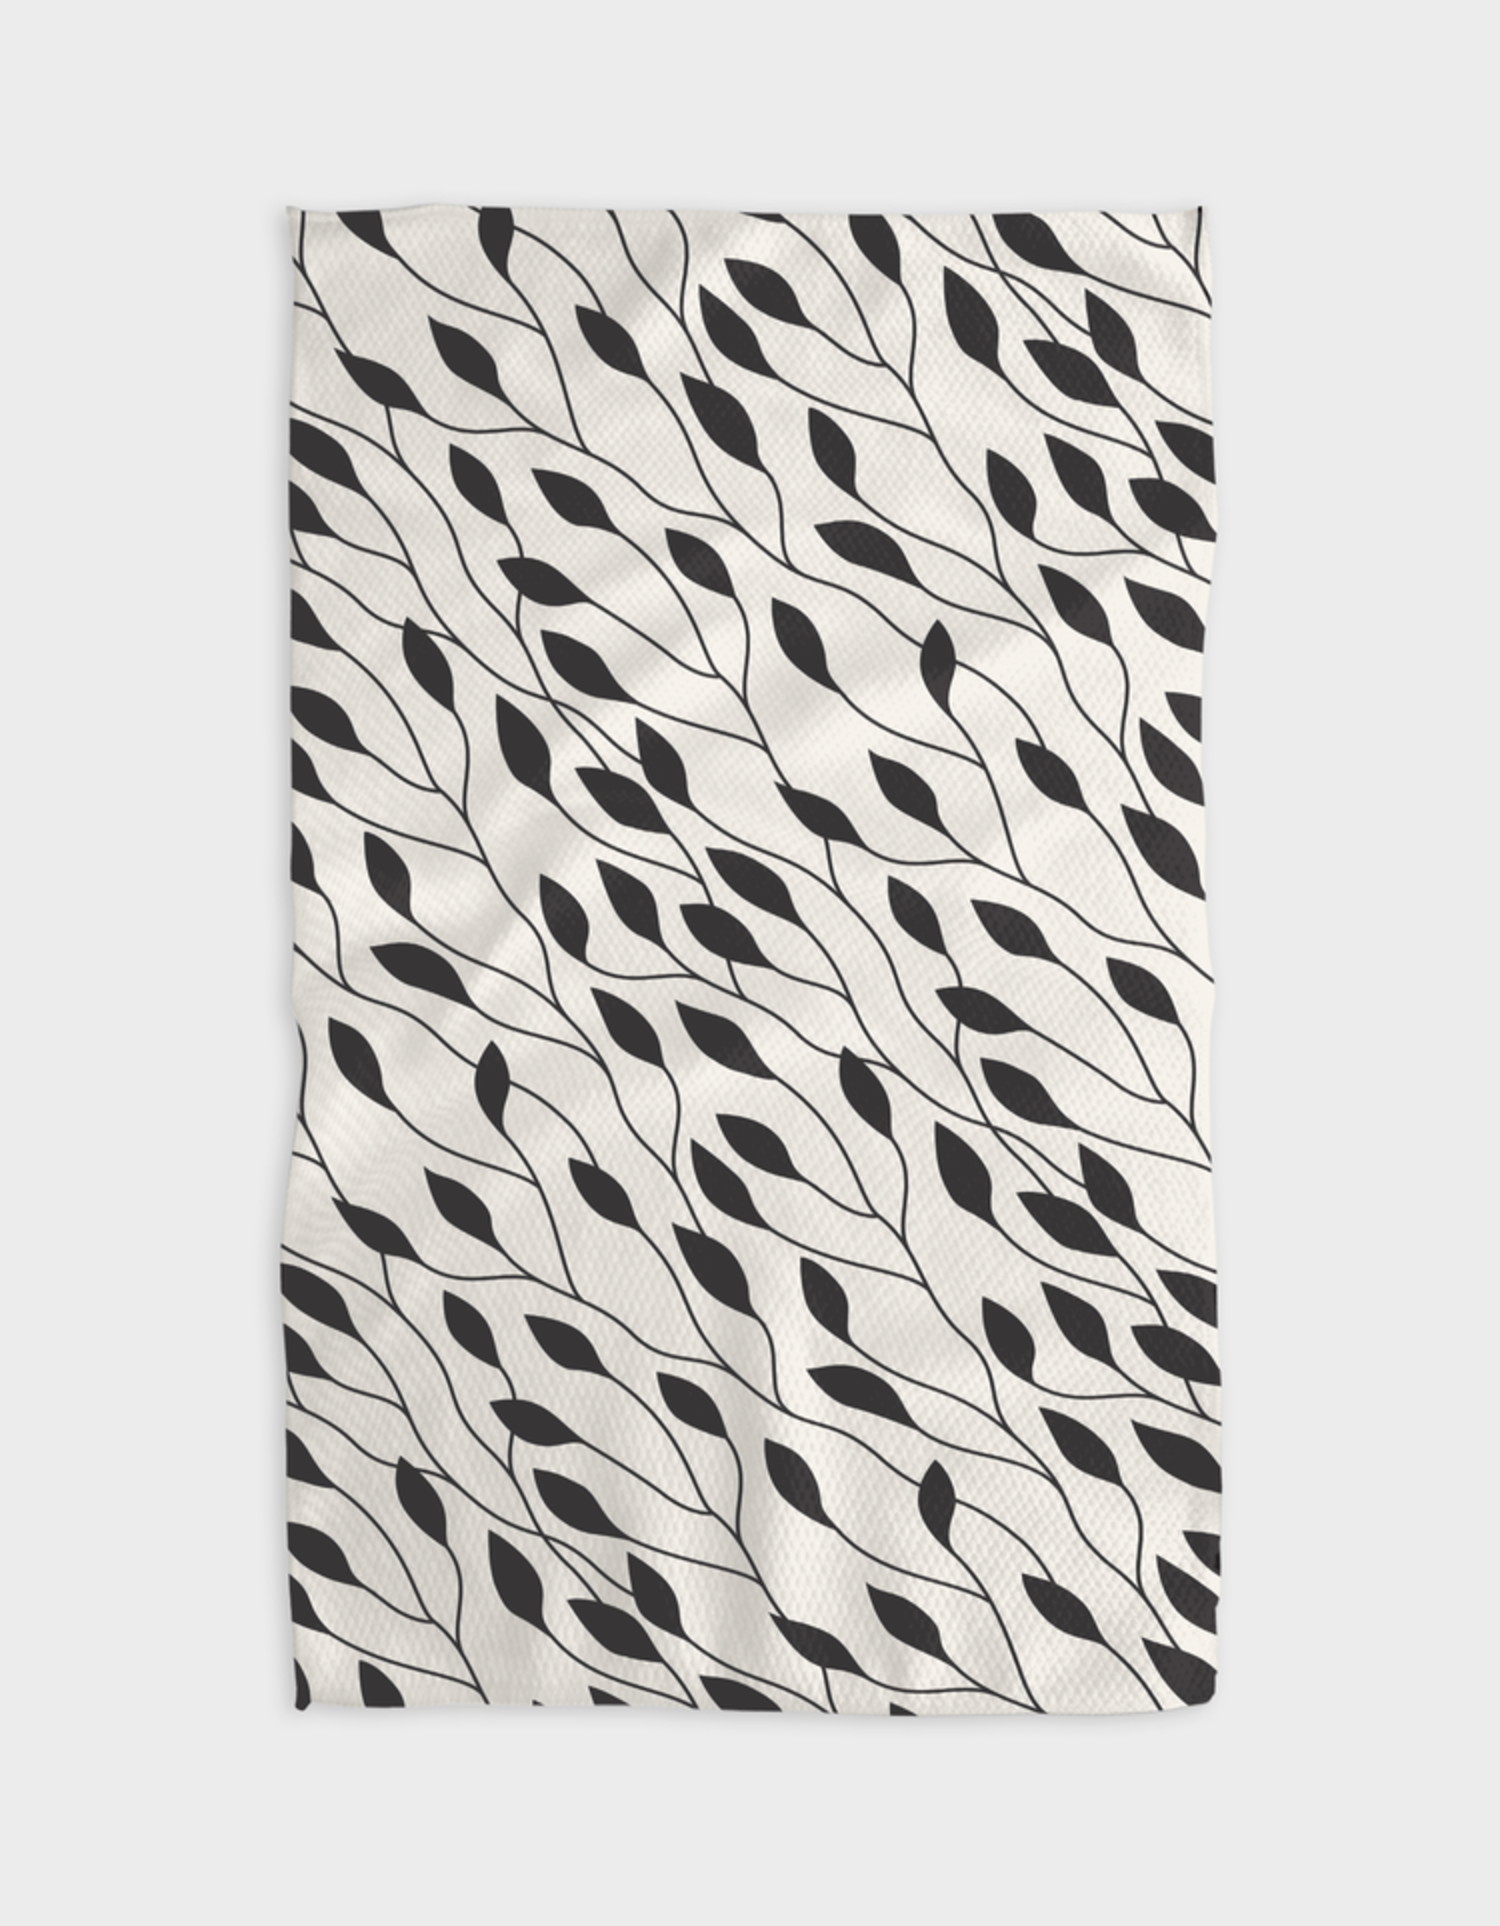 20 x 28 Printed Dot Tea Towel - Black & White